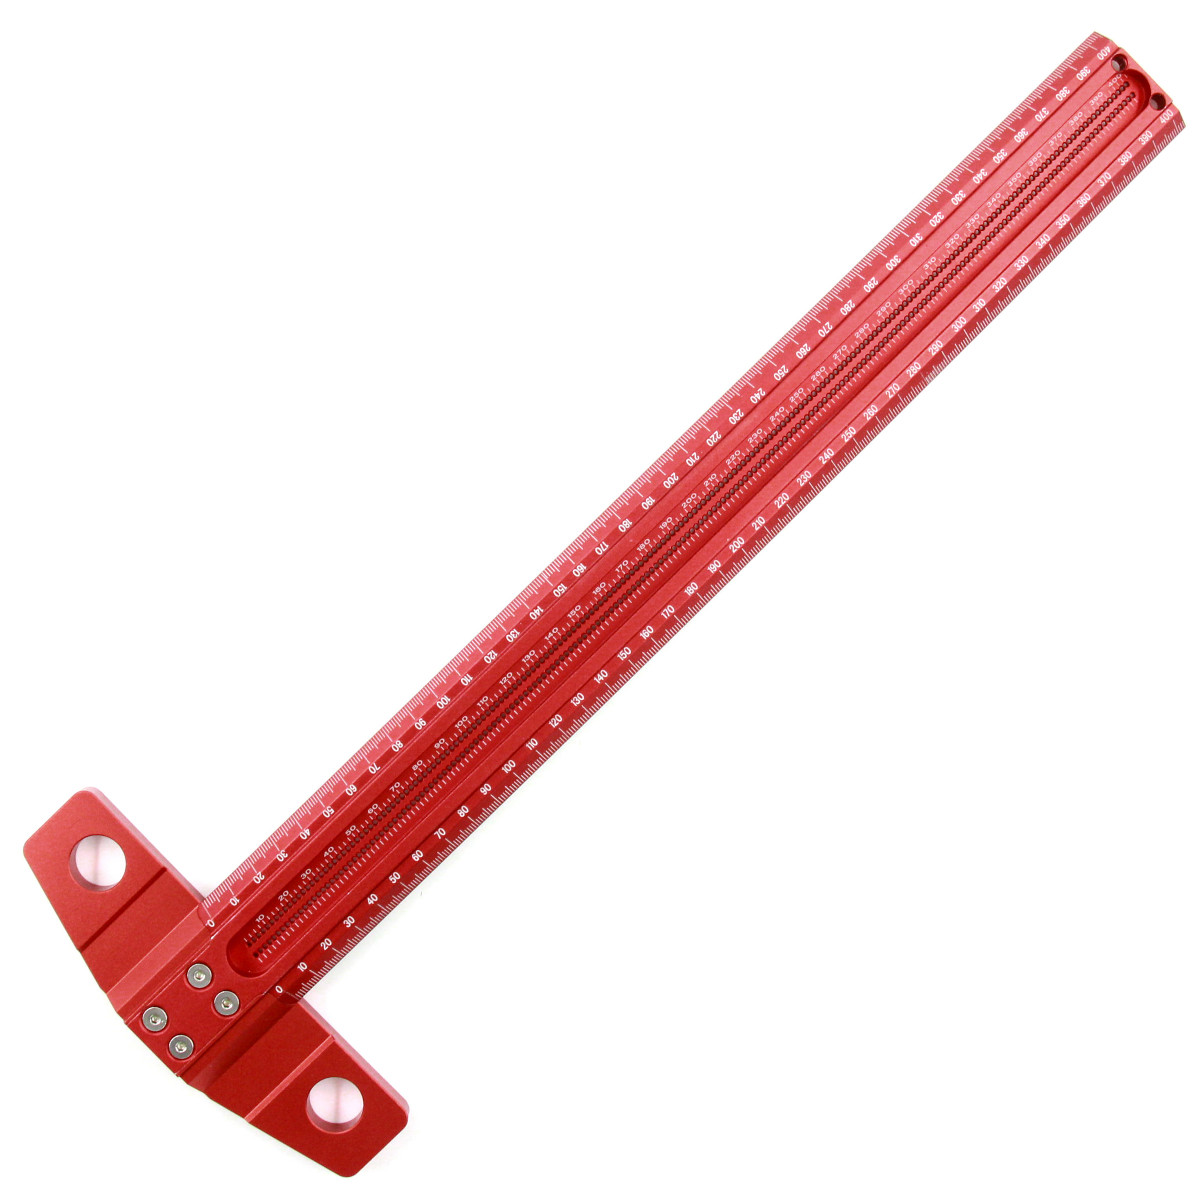 ETOPOO-Woodworking-T-type-Line-Scriber-Hole-Scale-Ruler-Aluminum-Alloy-Marking-Gauge-Crossed-Line-Sc-1798711-1